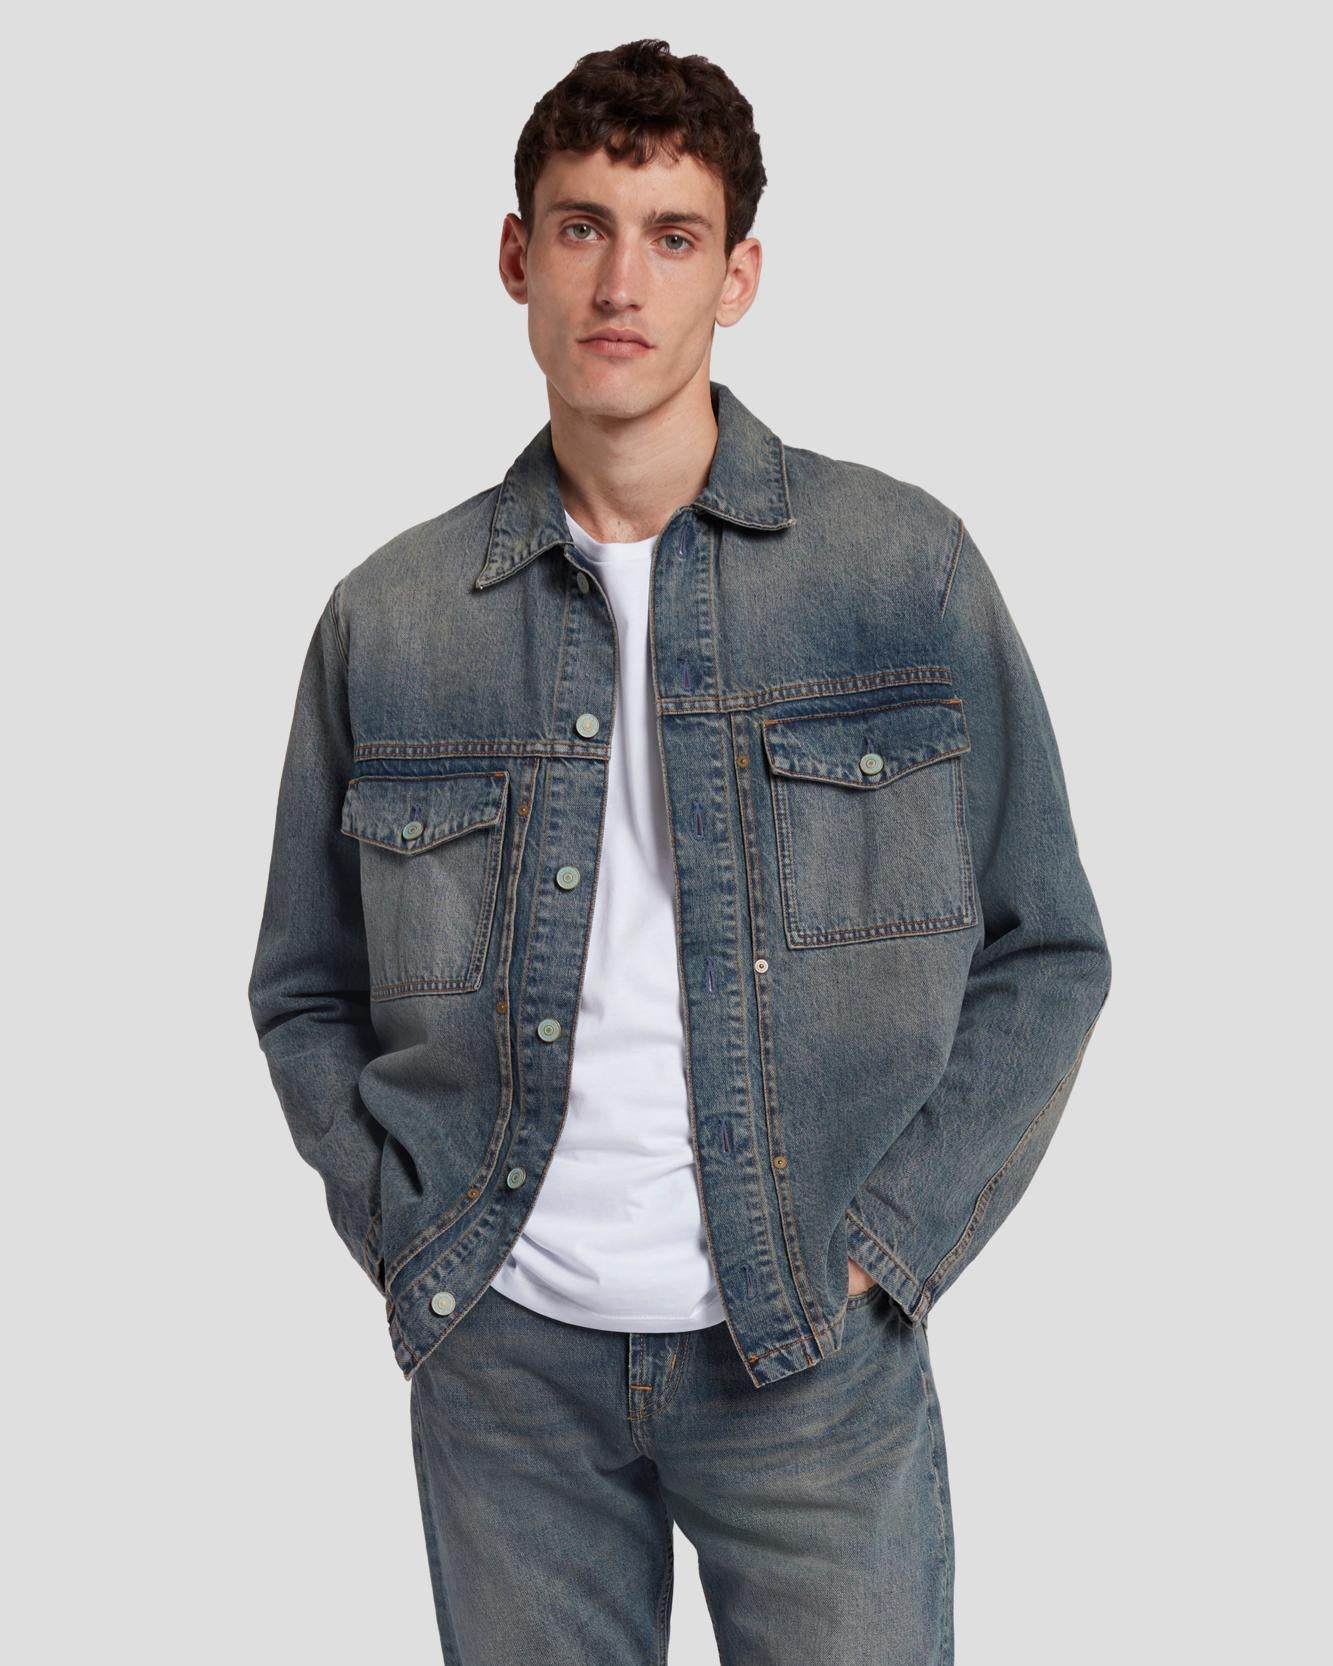 Jackets for Men | Designer Menswear Collection nline